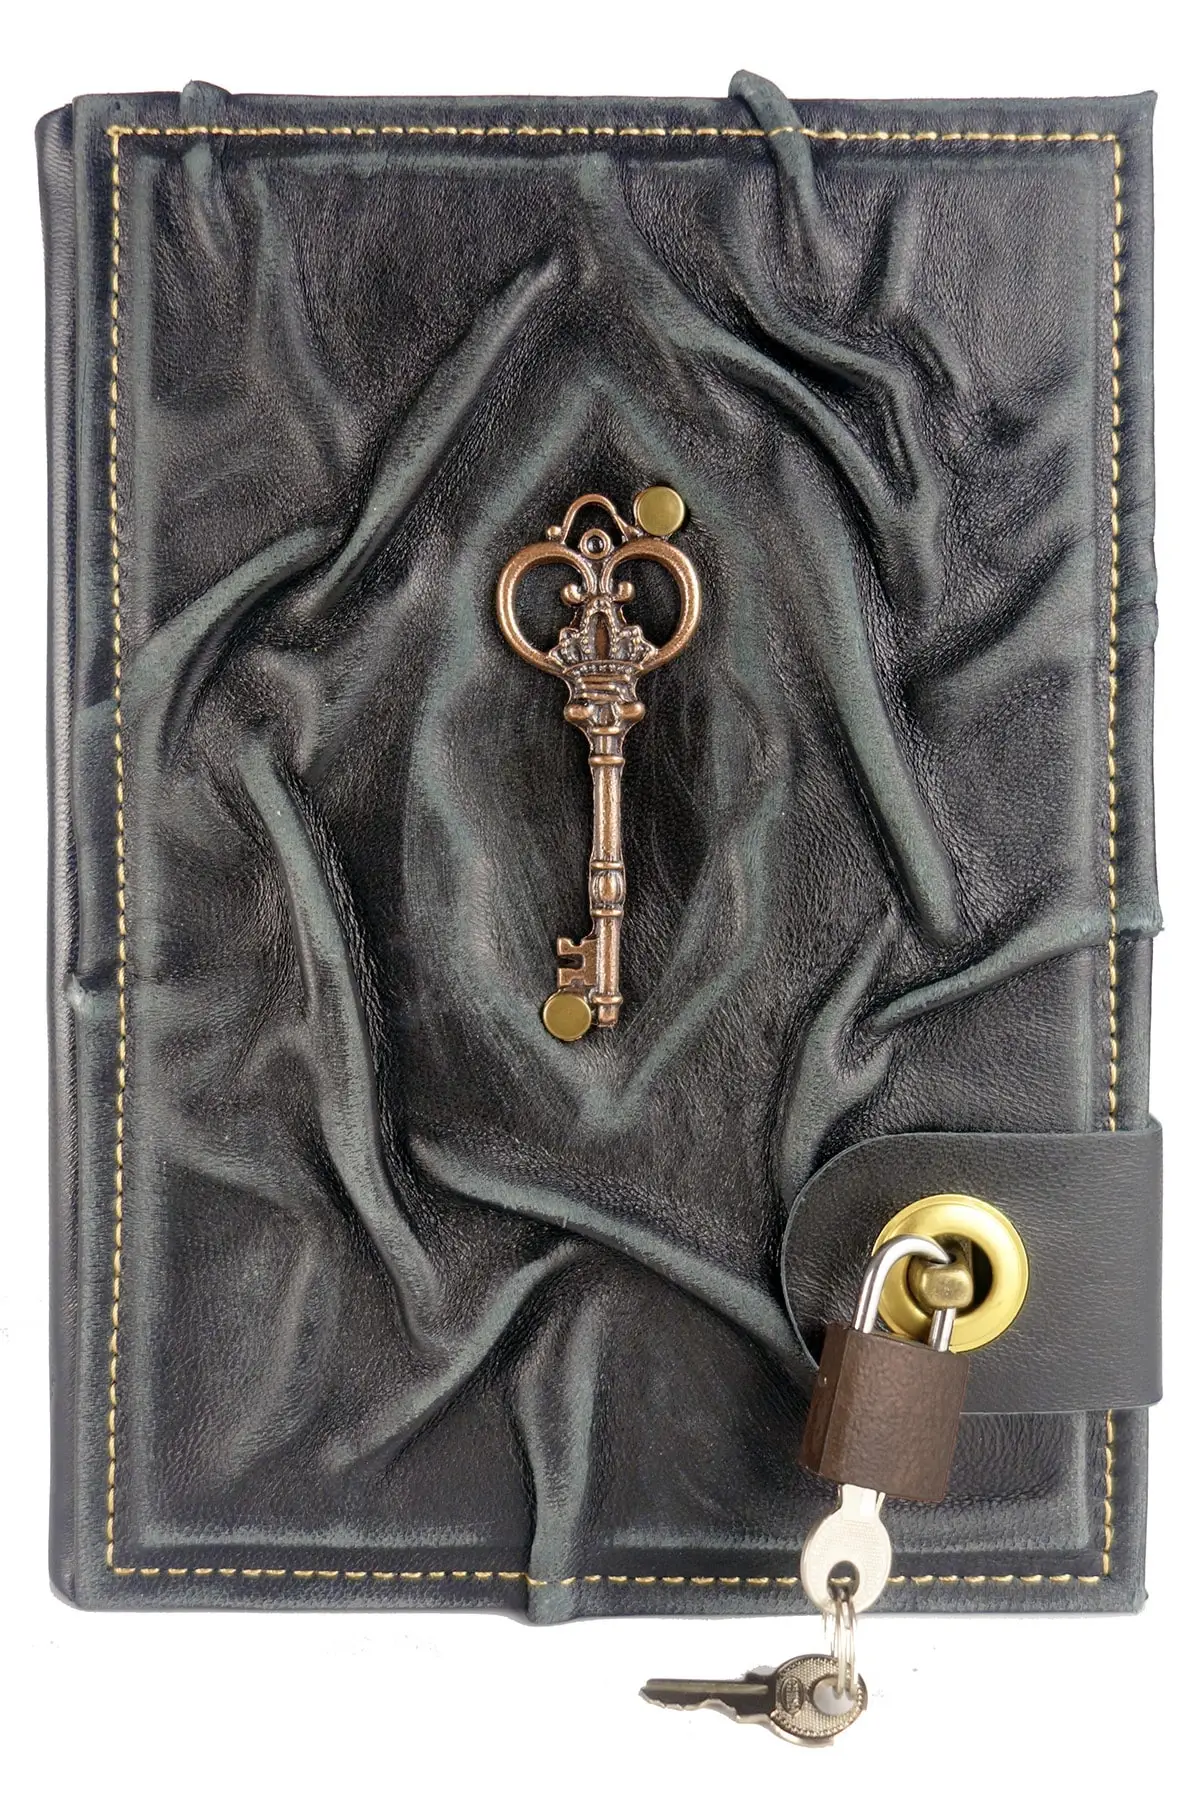 Antique Key Figure Locked Notebook Original Appearance Perfect Stylish Design